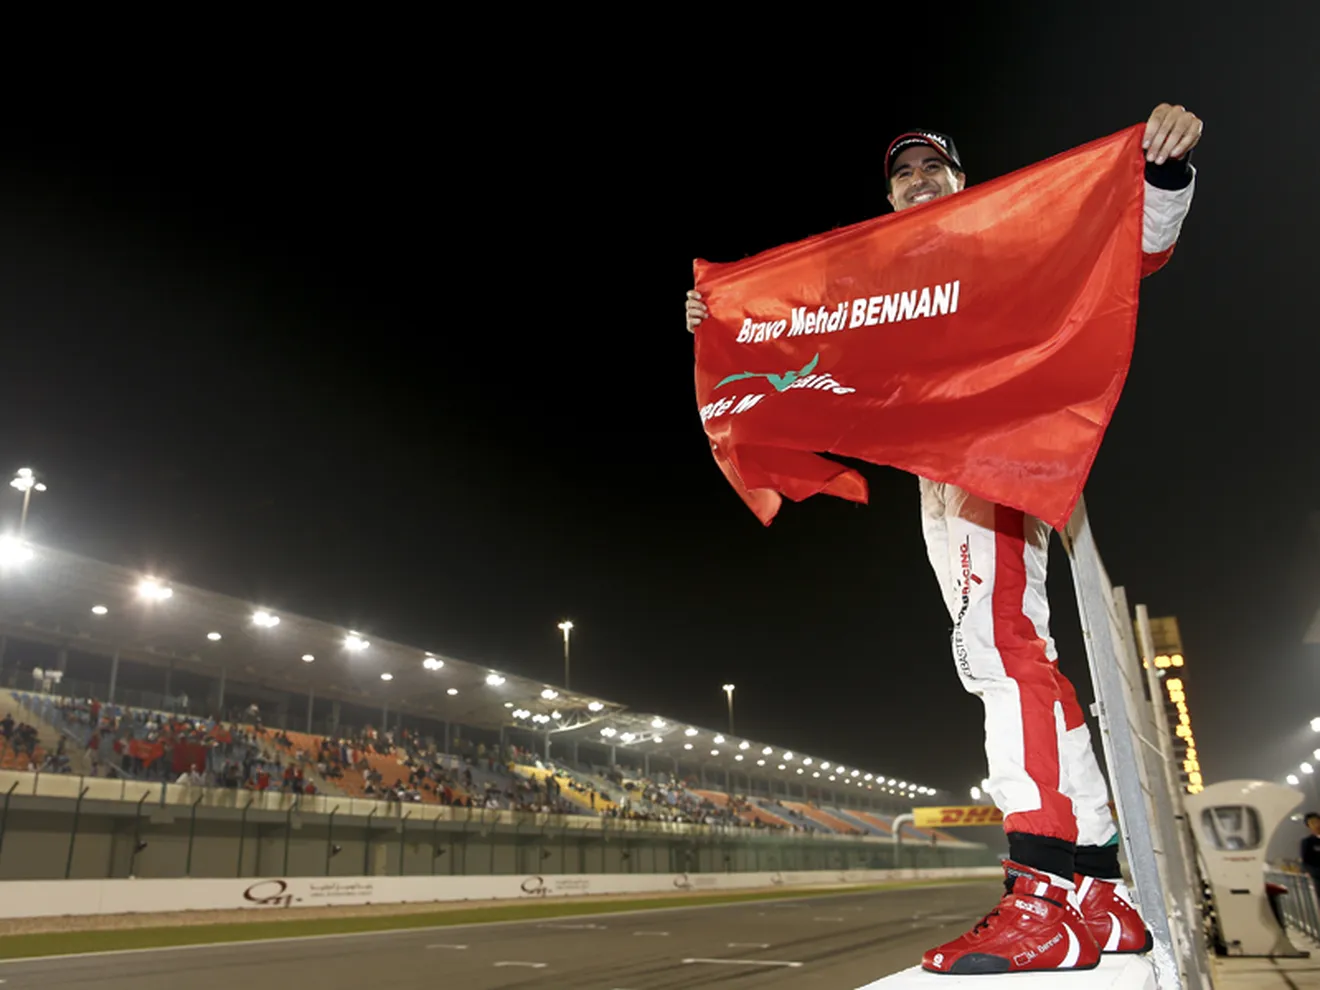 Sébastien Loeb Racing confirma a Medhi Bennani para 2016